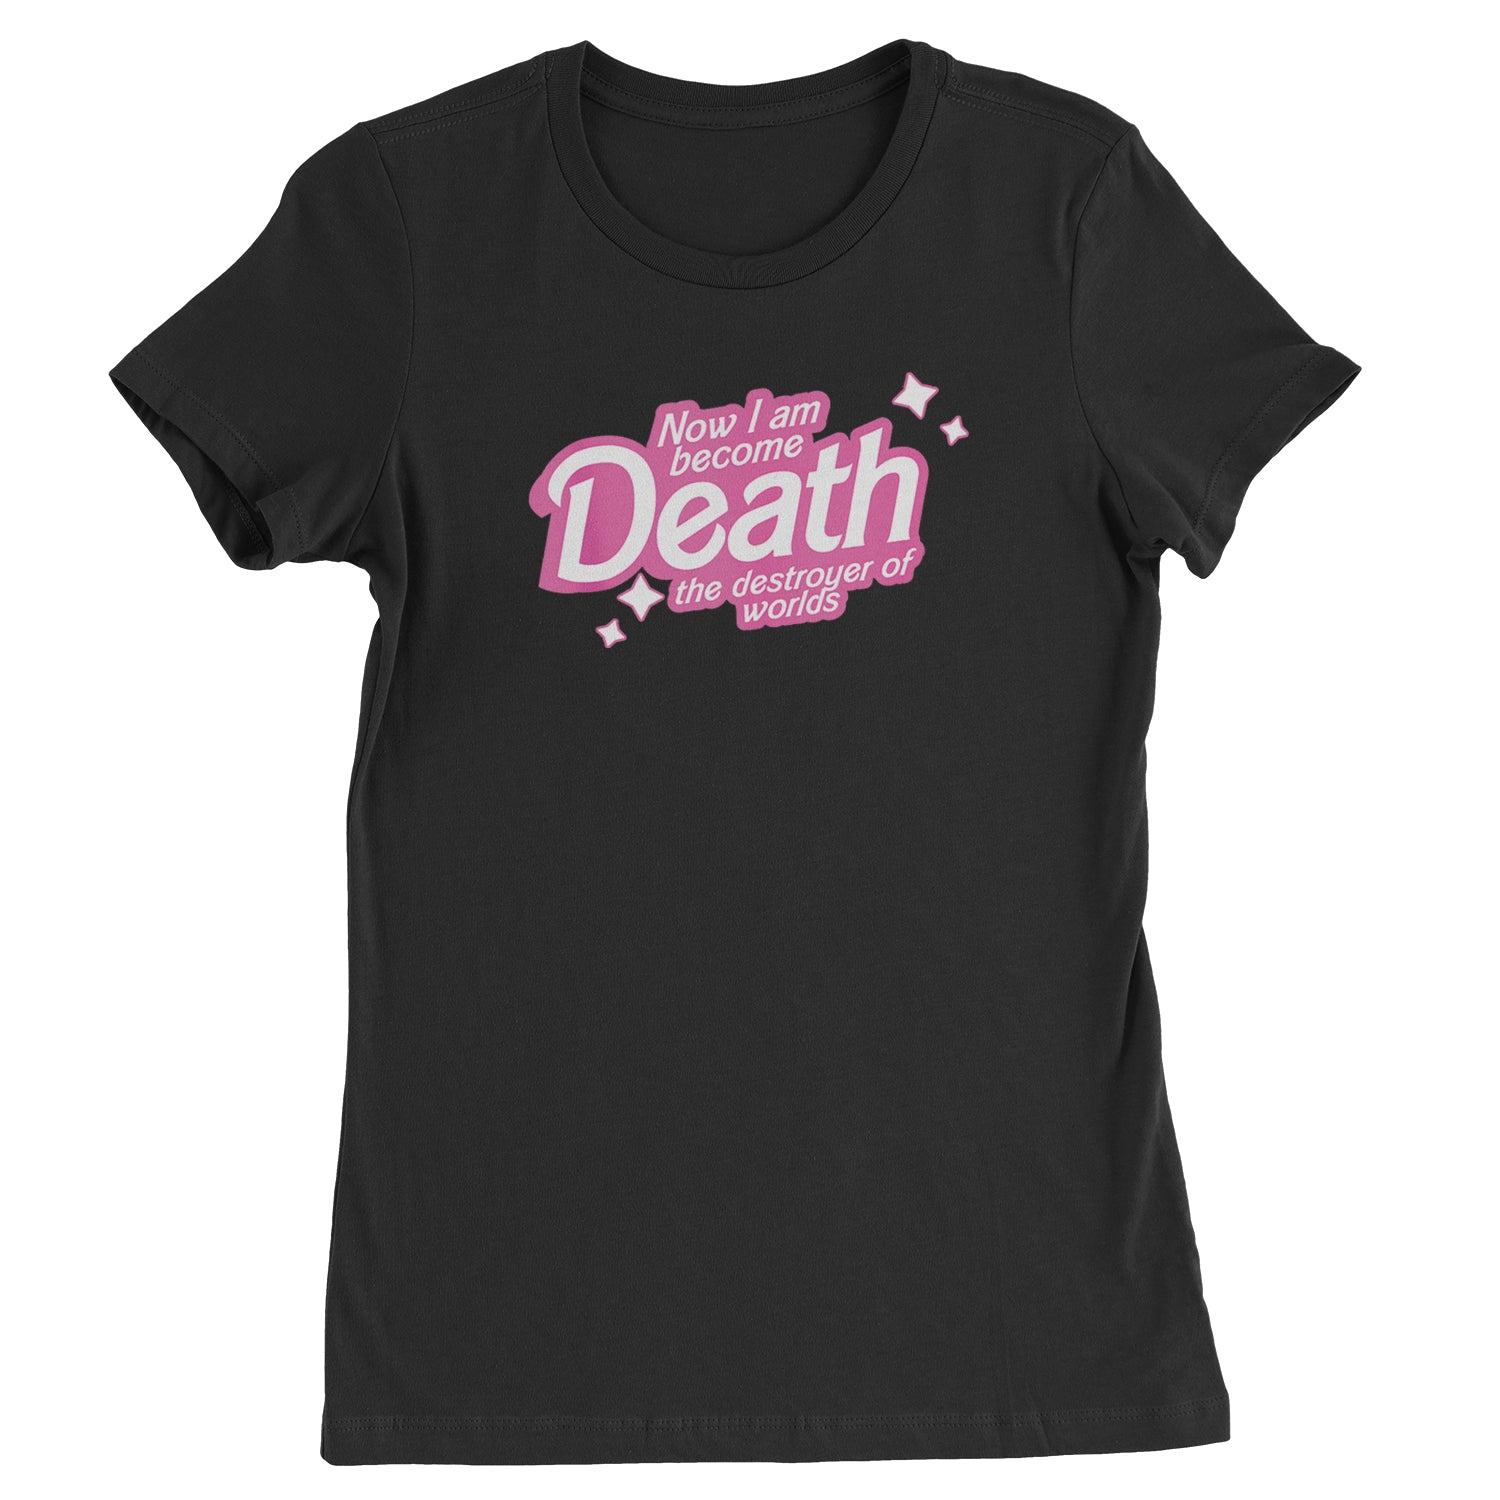 Now I am Become Death Barbenheimer Womens T-shirt